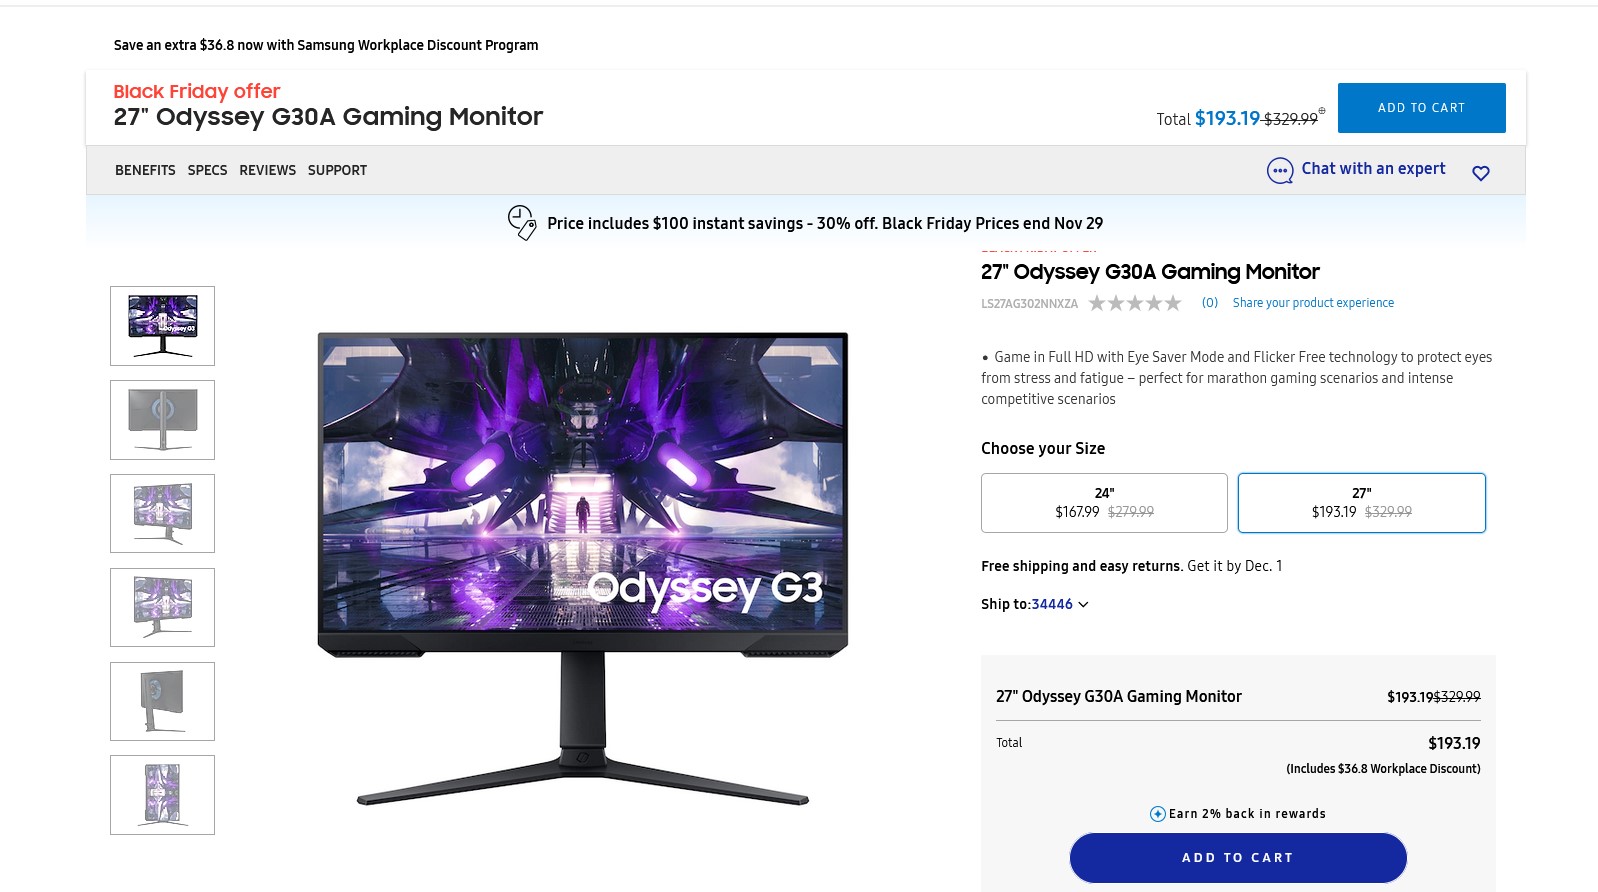 Samsung Odyssey G30A 27" Gaming Monitor (Flat Panel) $193.19 w/ EPP/EDU at Samsung.com (retail $329) 24" @ $167.99 1080P 144HZ Flat Panel